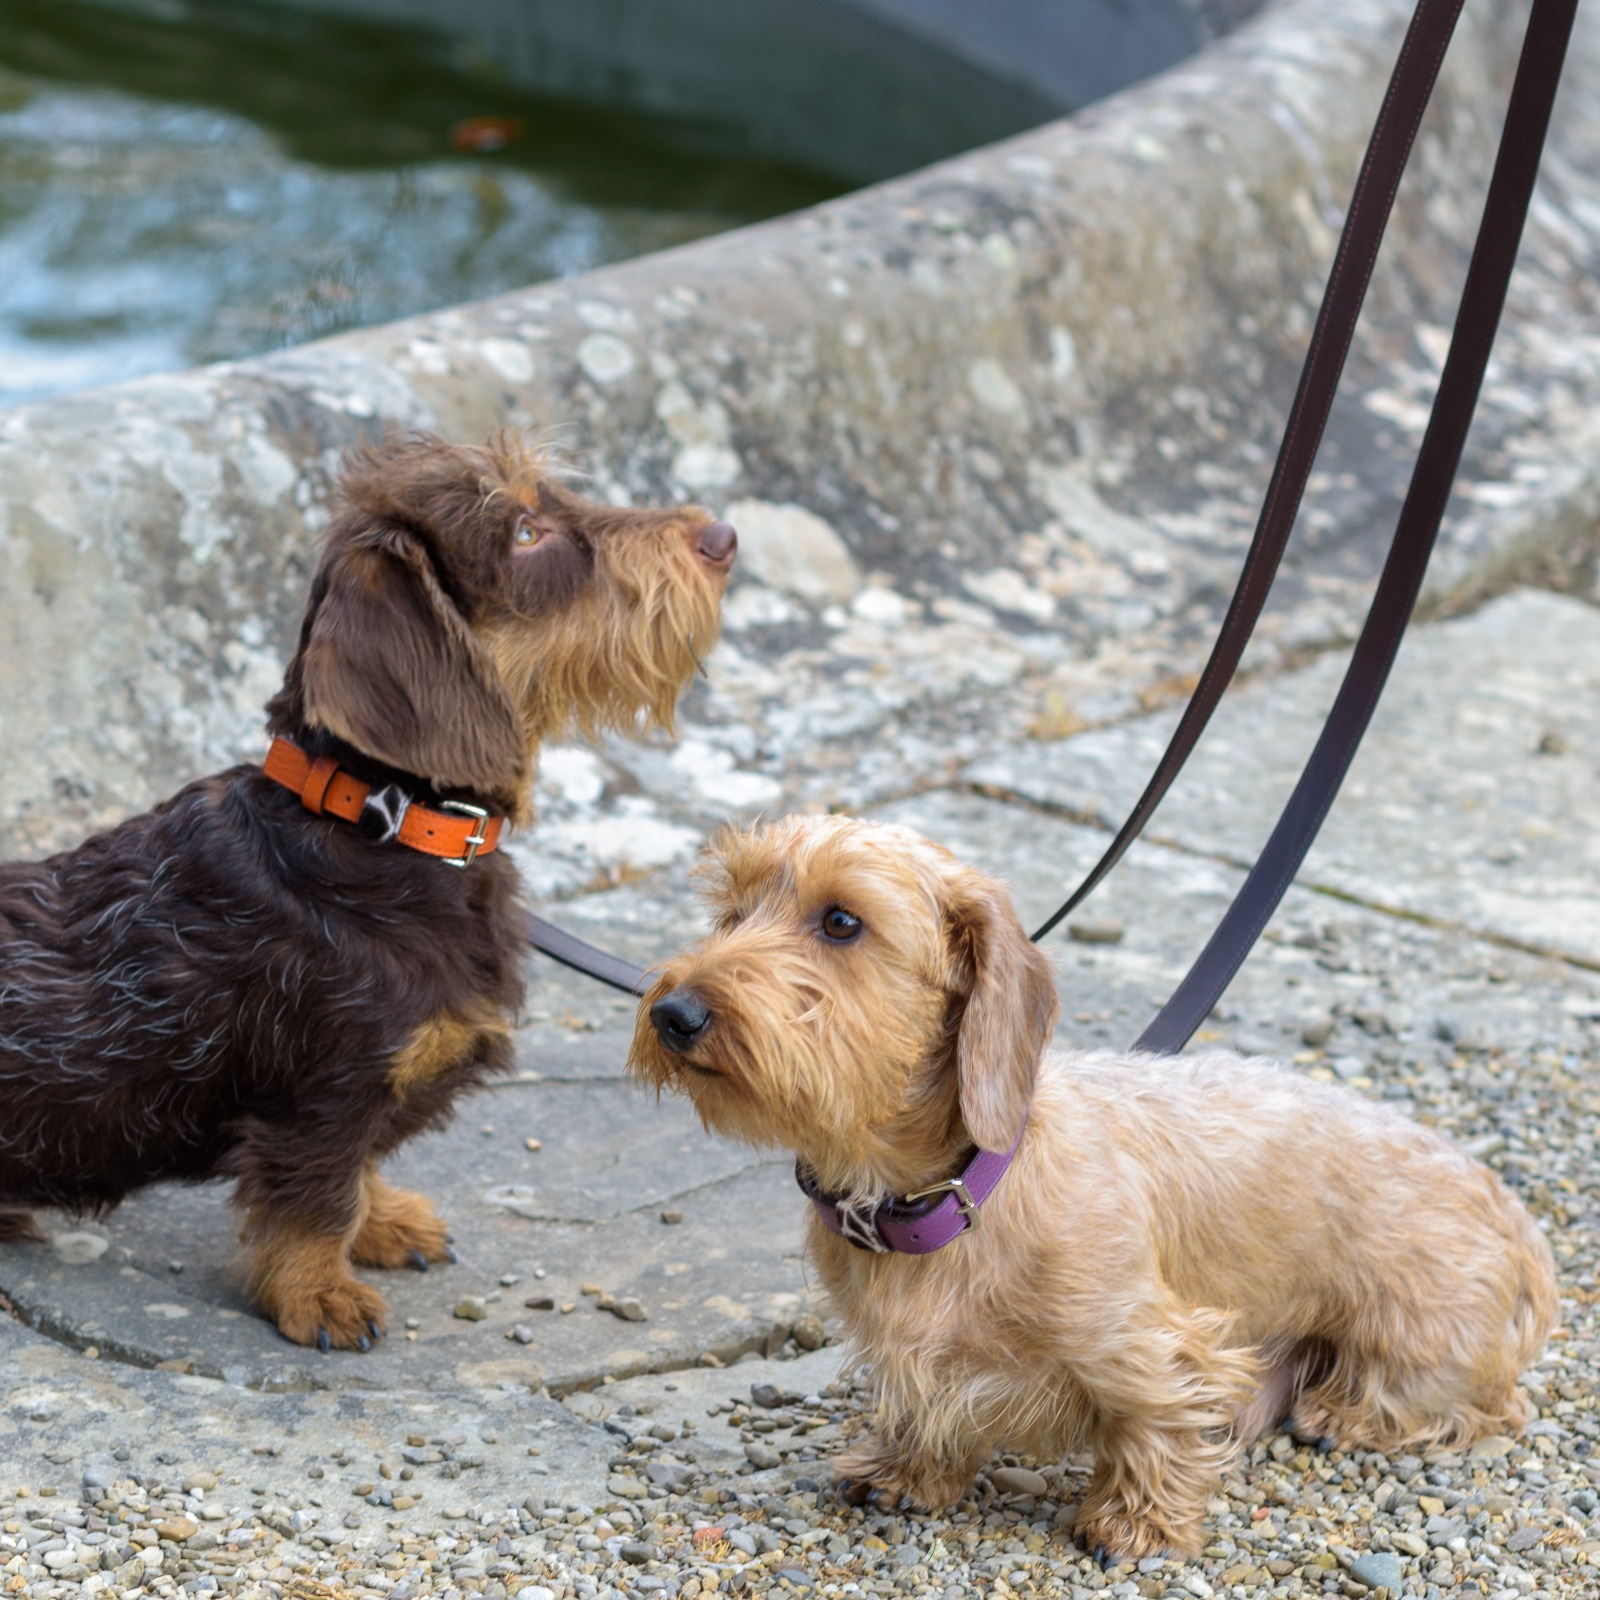 Pet Perfect Luxury Dog Collar Dog Gift - Italian Leather Designer Dog  Collar - Cute Dog Collar - Durable Dog Collar with Bow - Stylish and  Comfortable